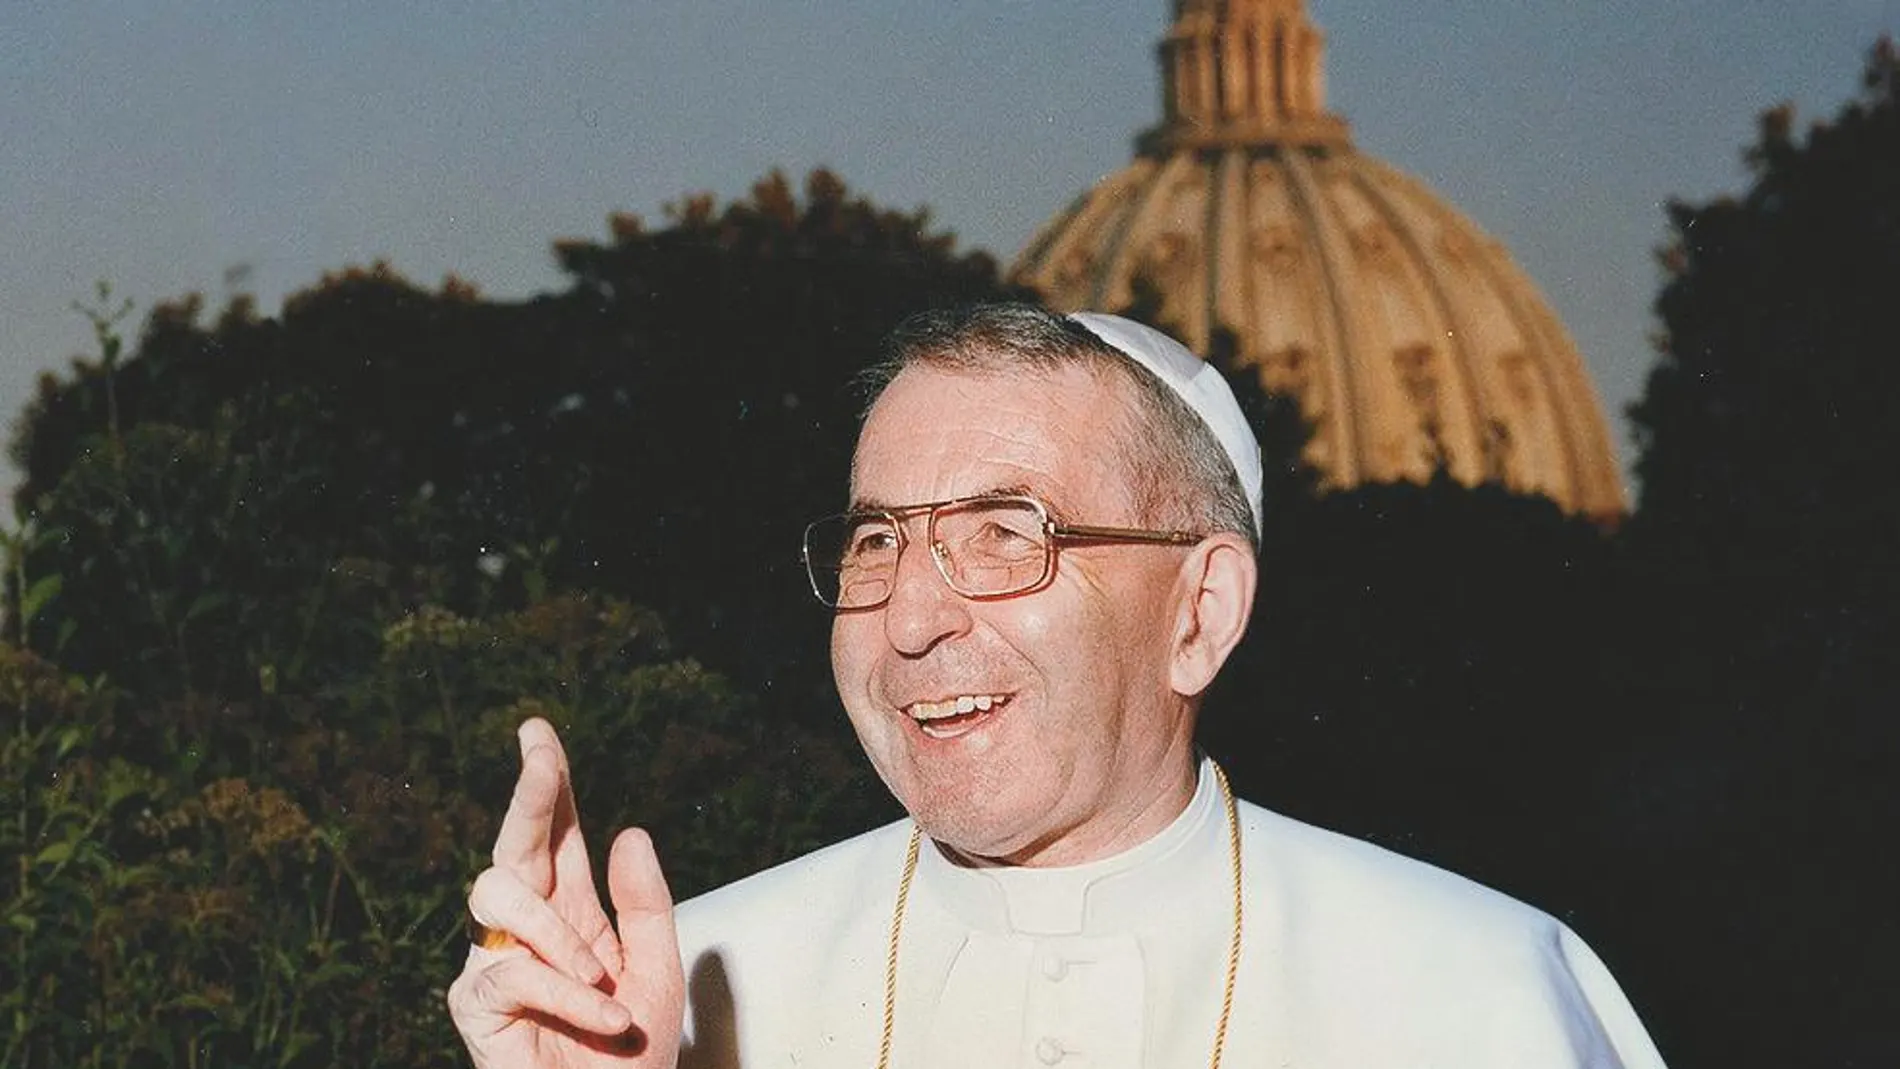 El Papa Juan Pablo I, fotografiado junto al Vaticano en 1978